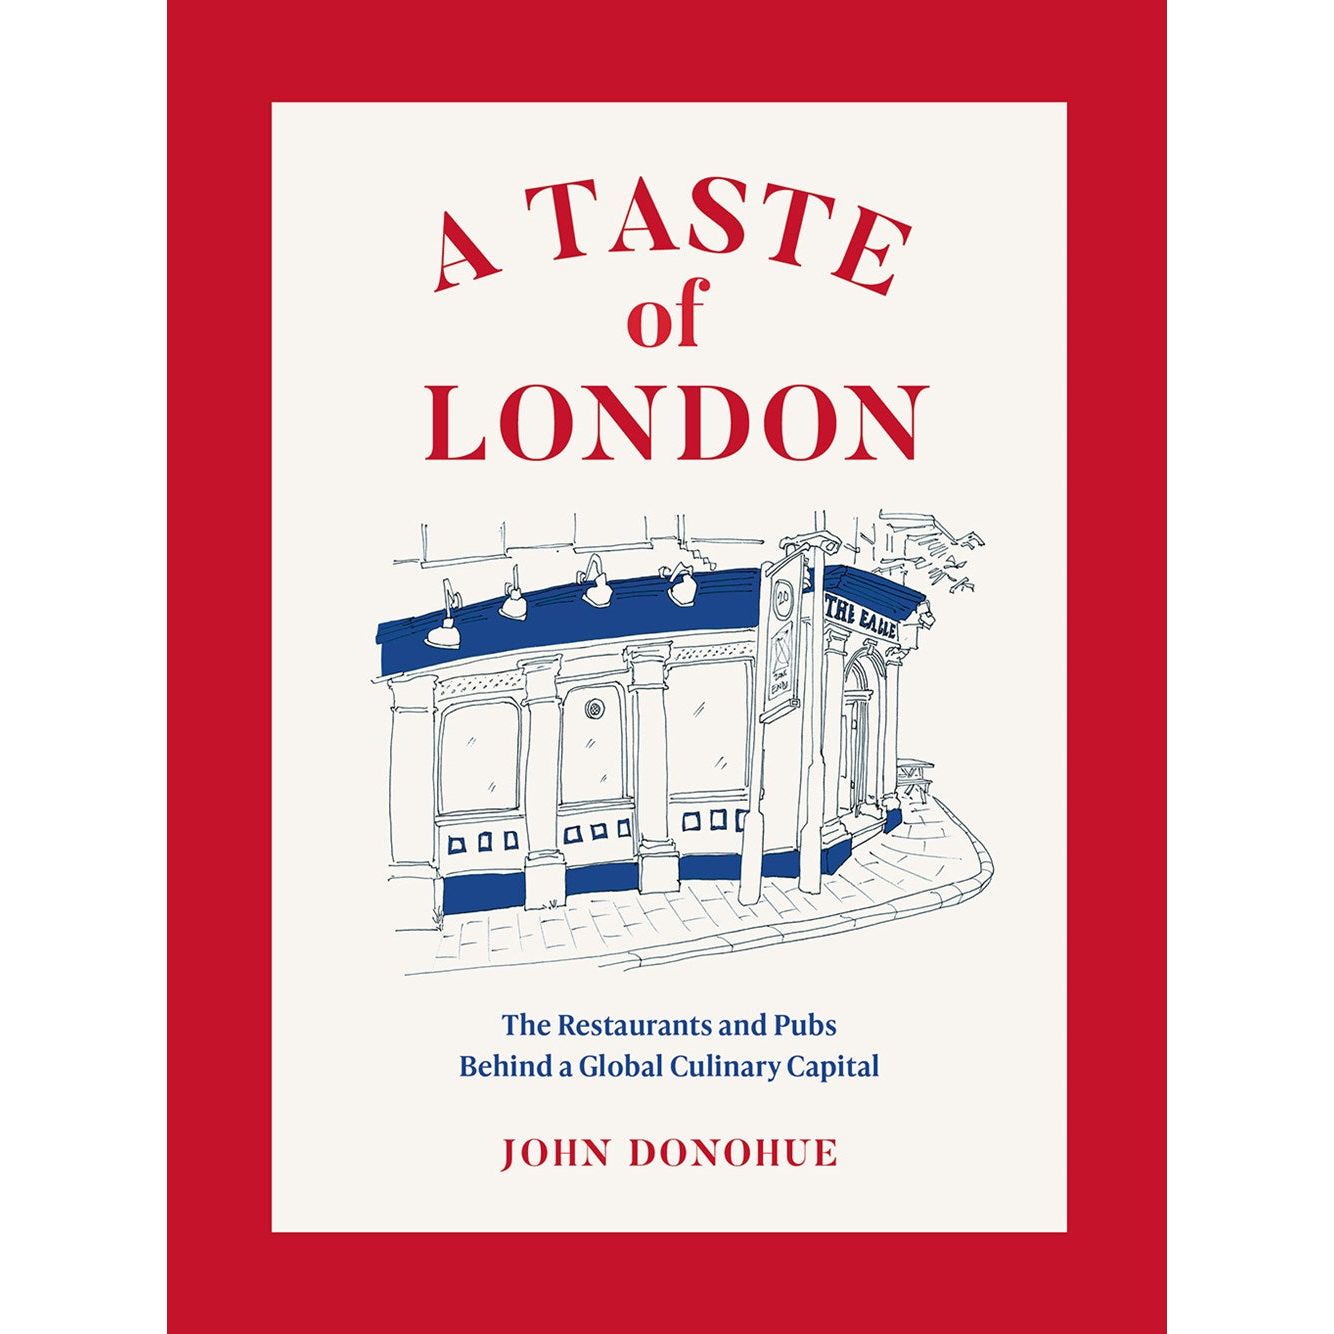 A Taste of London (John Donohue)